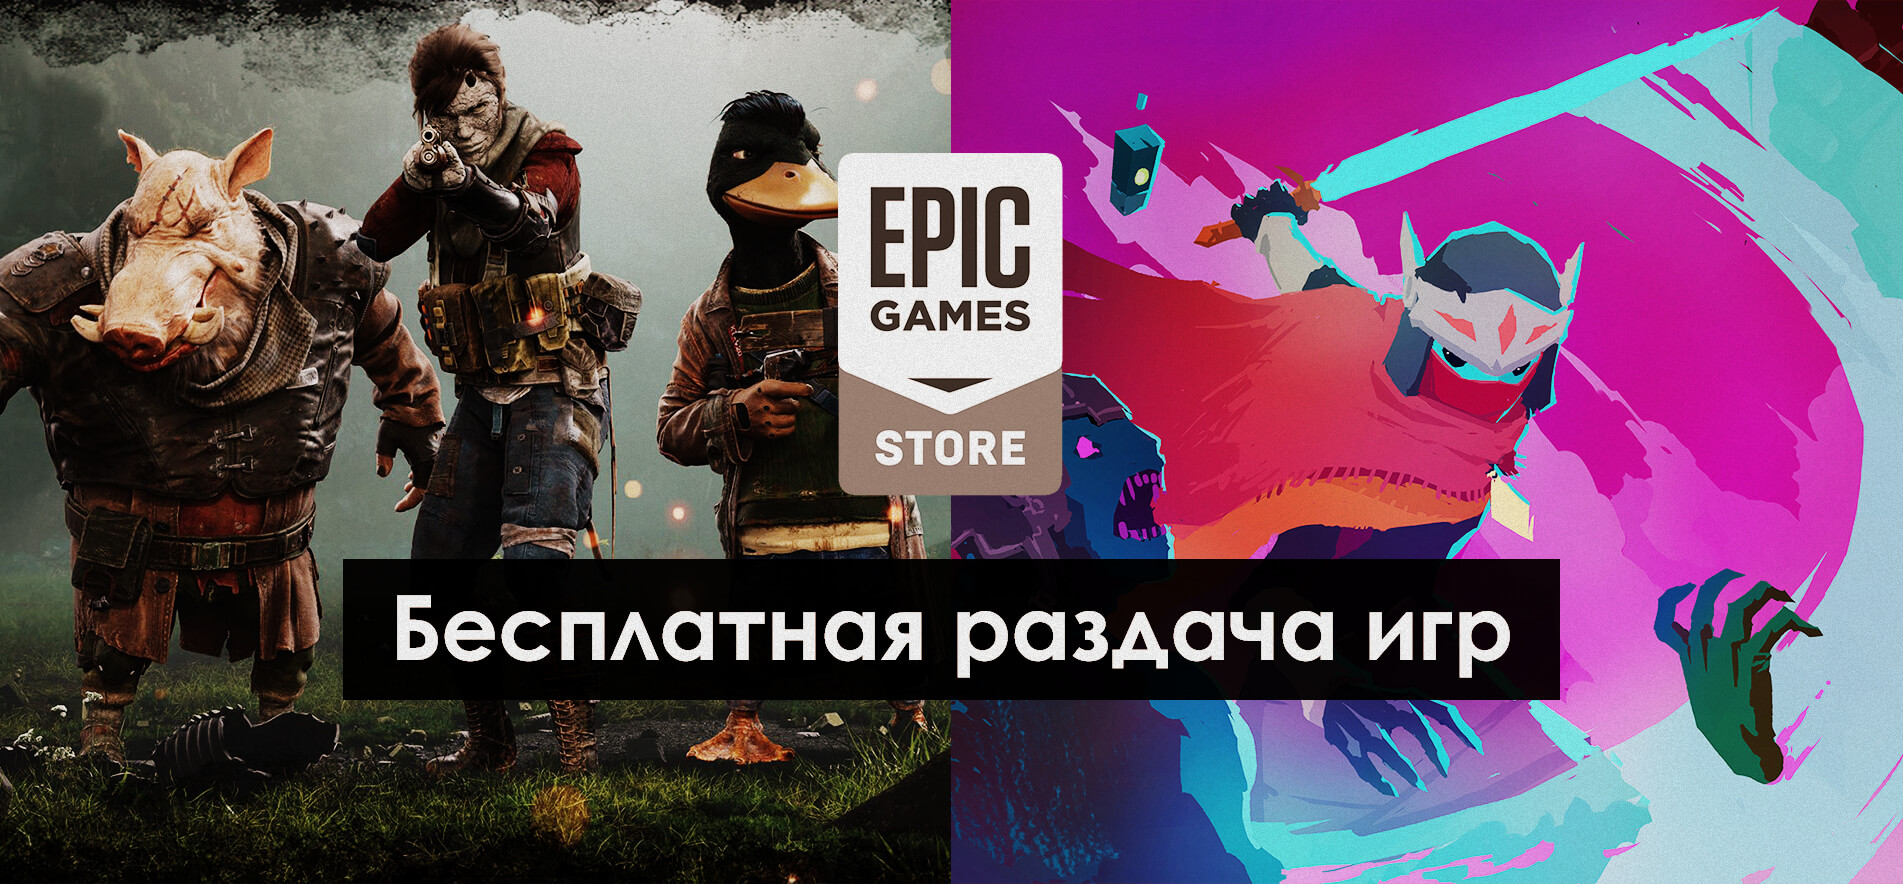 Epic games платежи. Сервера Epic games в Европе.